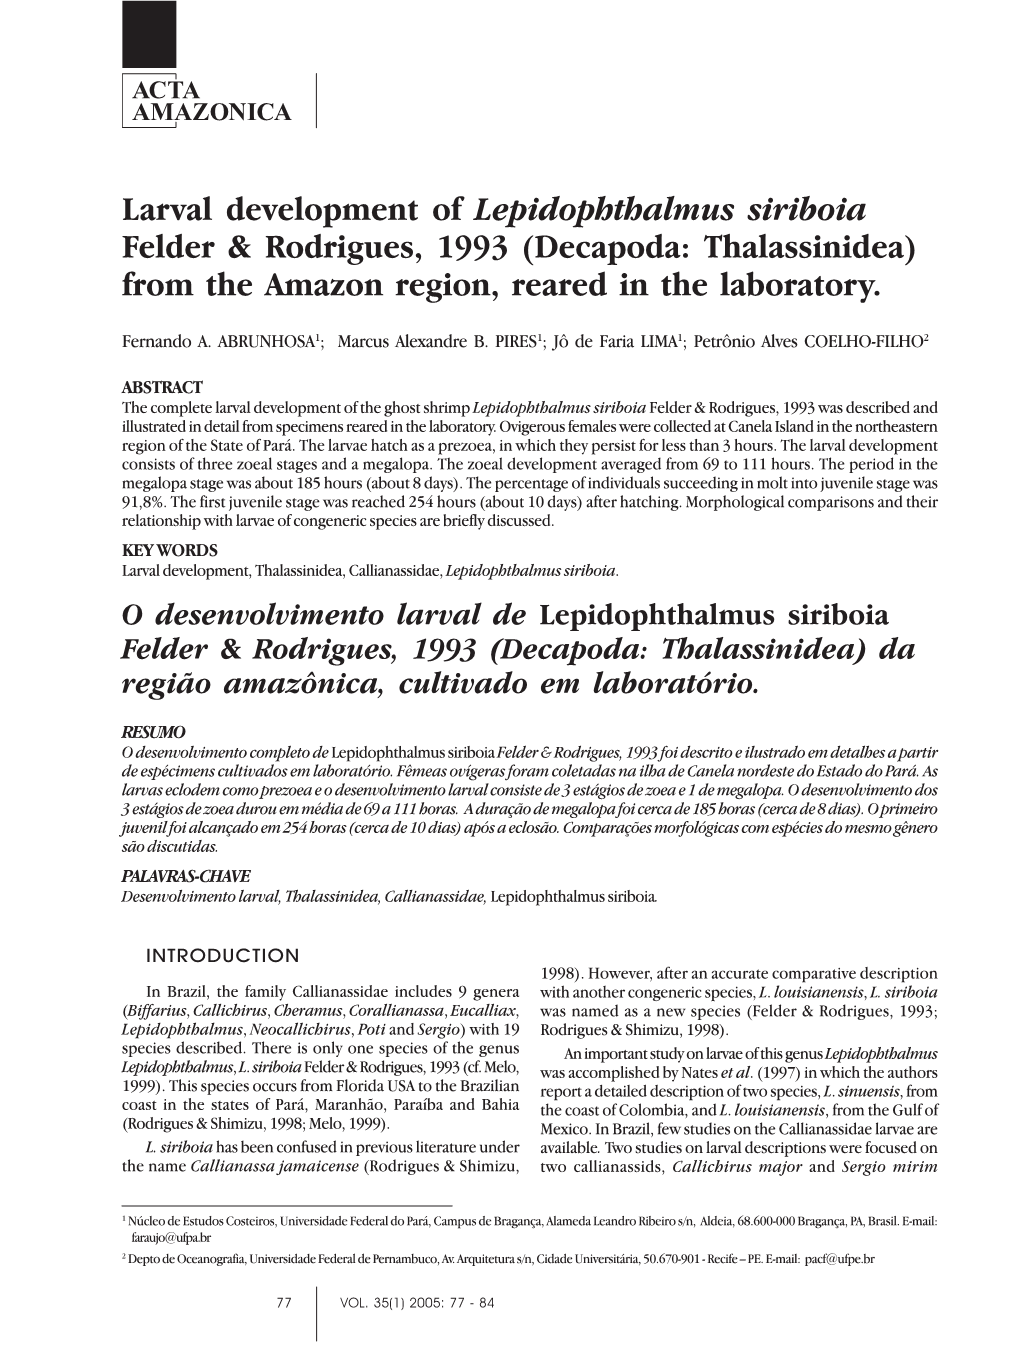 Larval Development of Lepidophthalmus Siriboia Felder & Rodrigues, 1993 (Decapoda: Thalassinidea) from the Amazon Region, Reared in the Laboratory